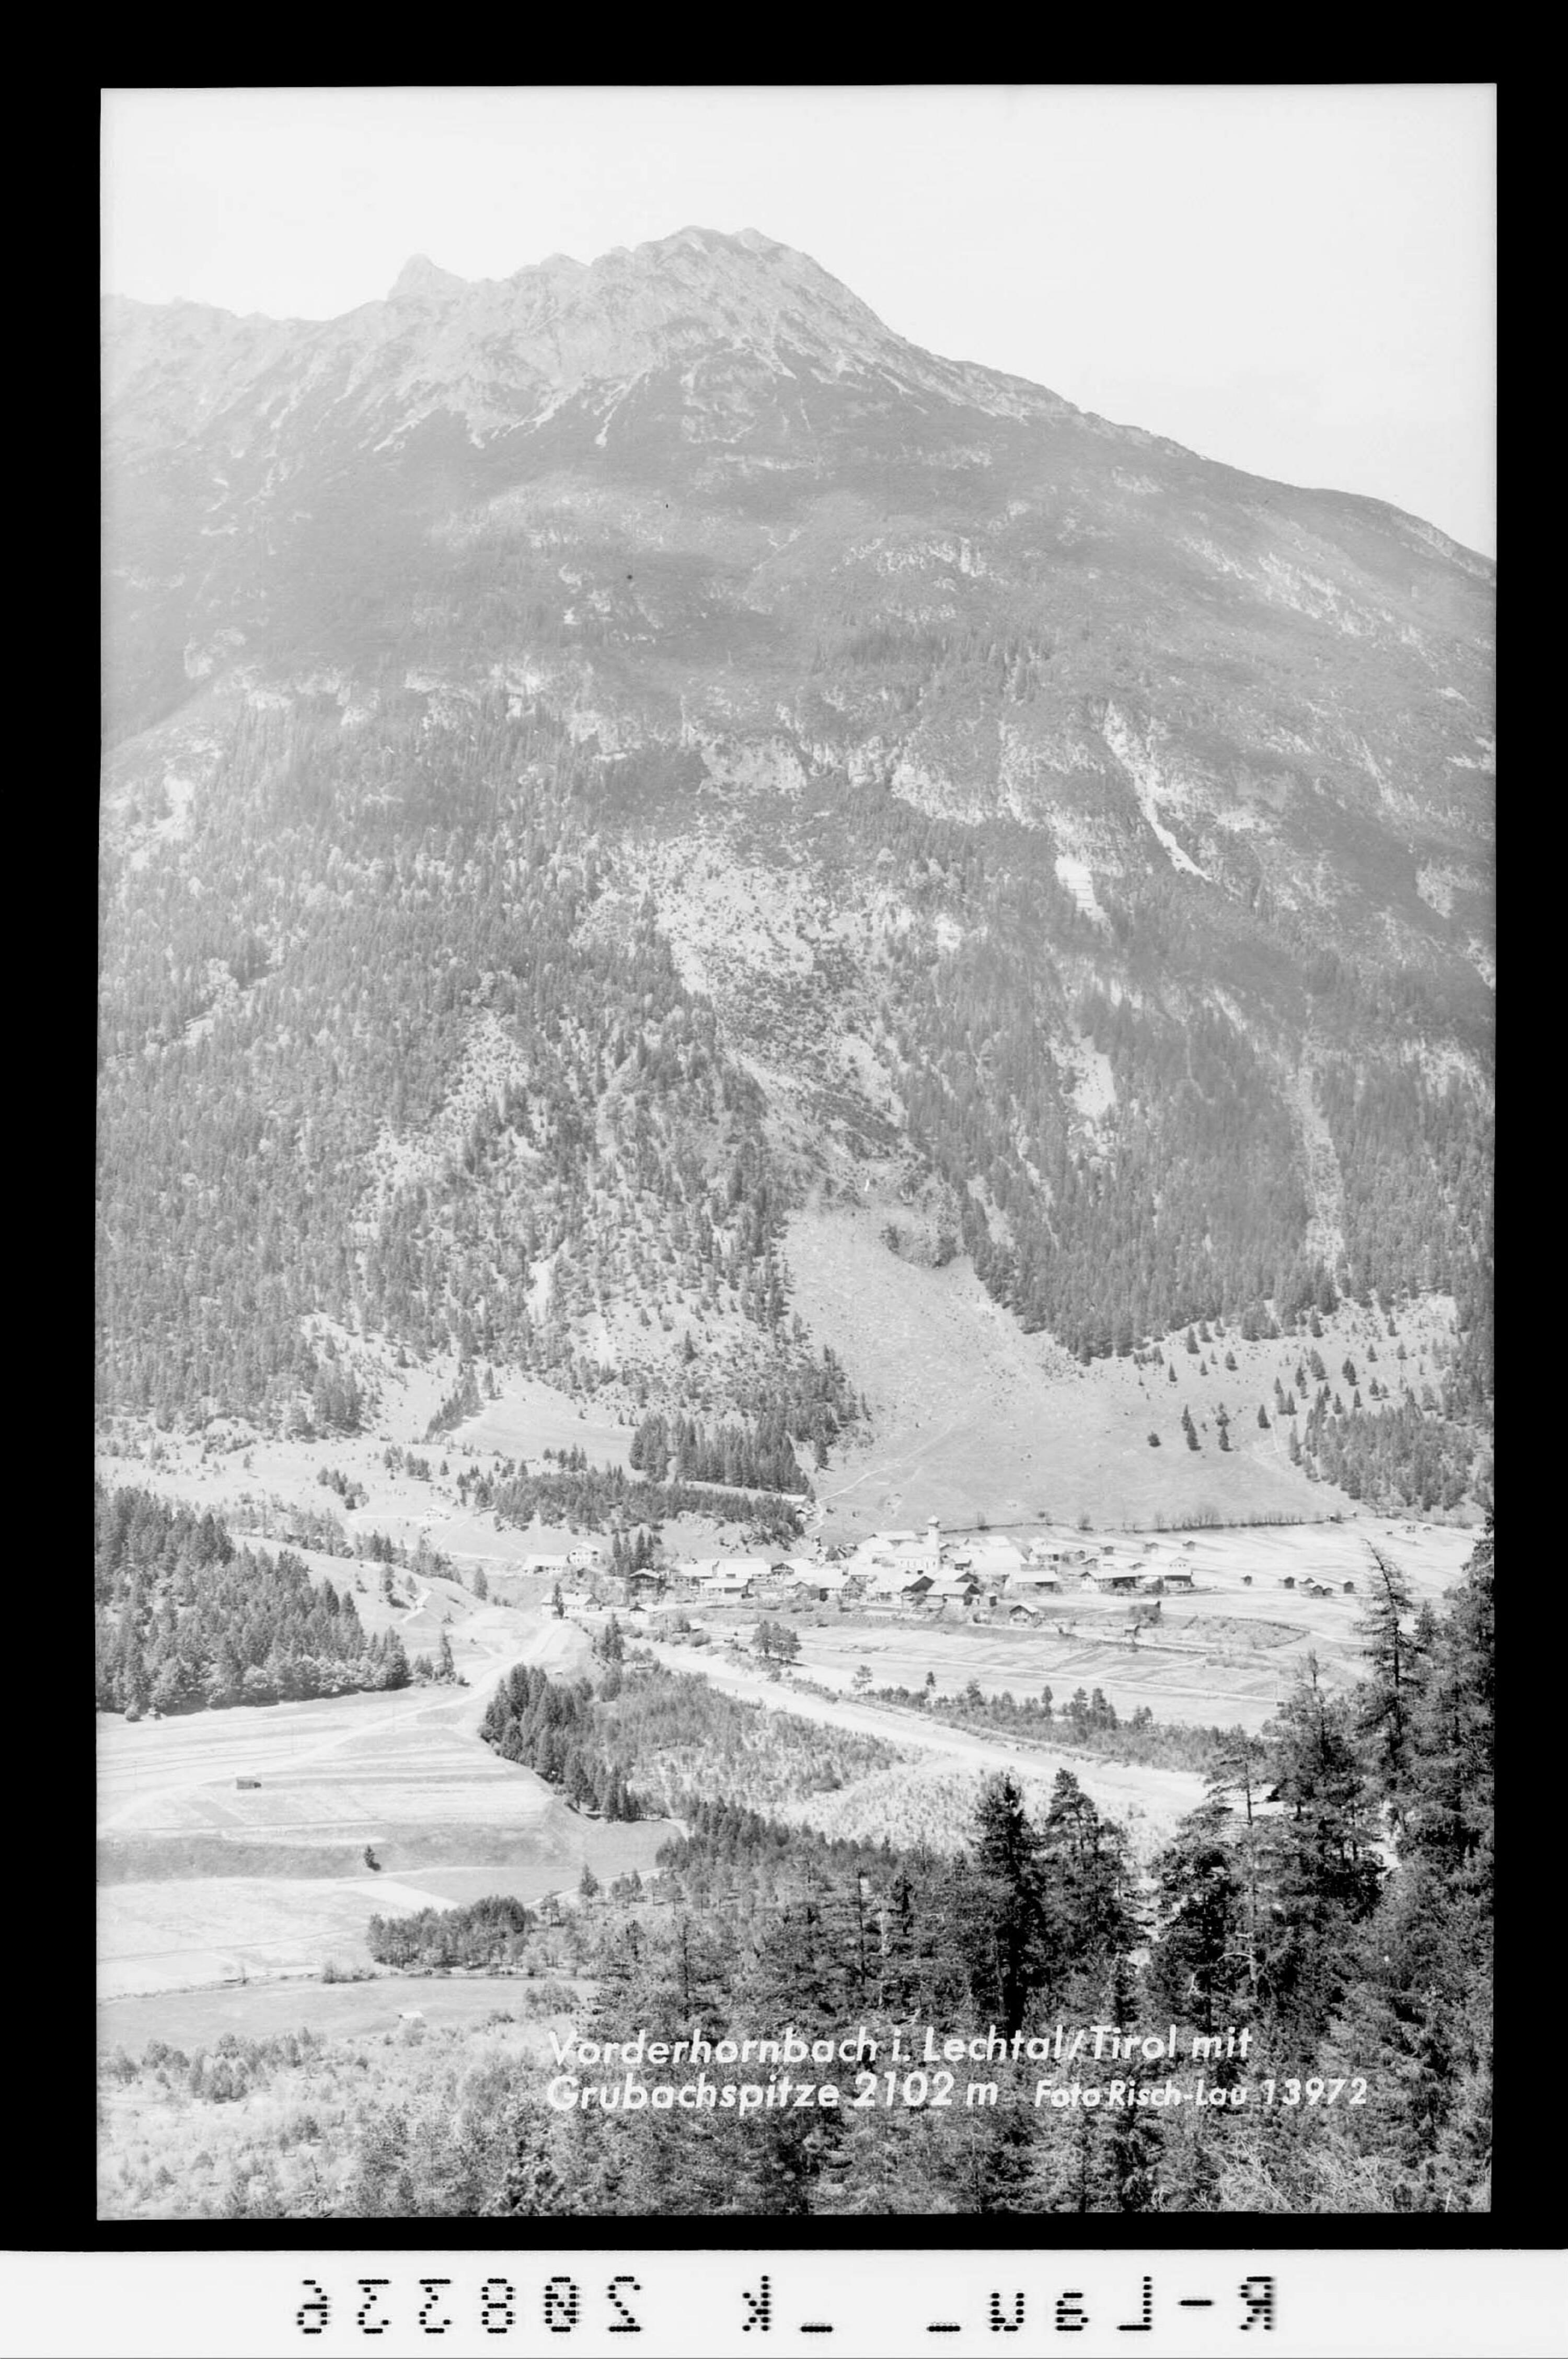 Vorderhornbach im Lechtal / Tirol mit Grubachspitze 2102 m></div>


    <hr>
    <div class=